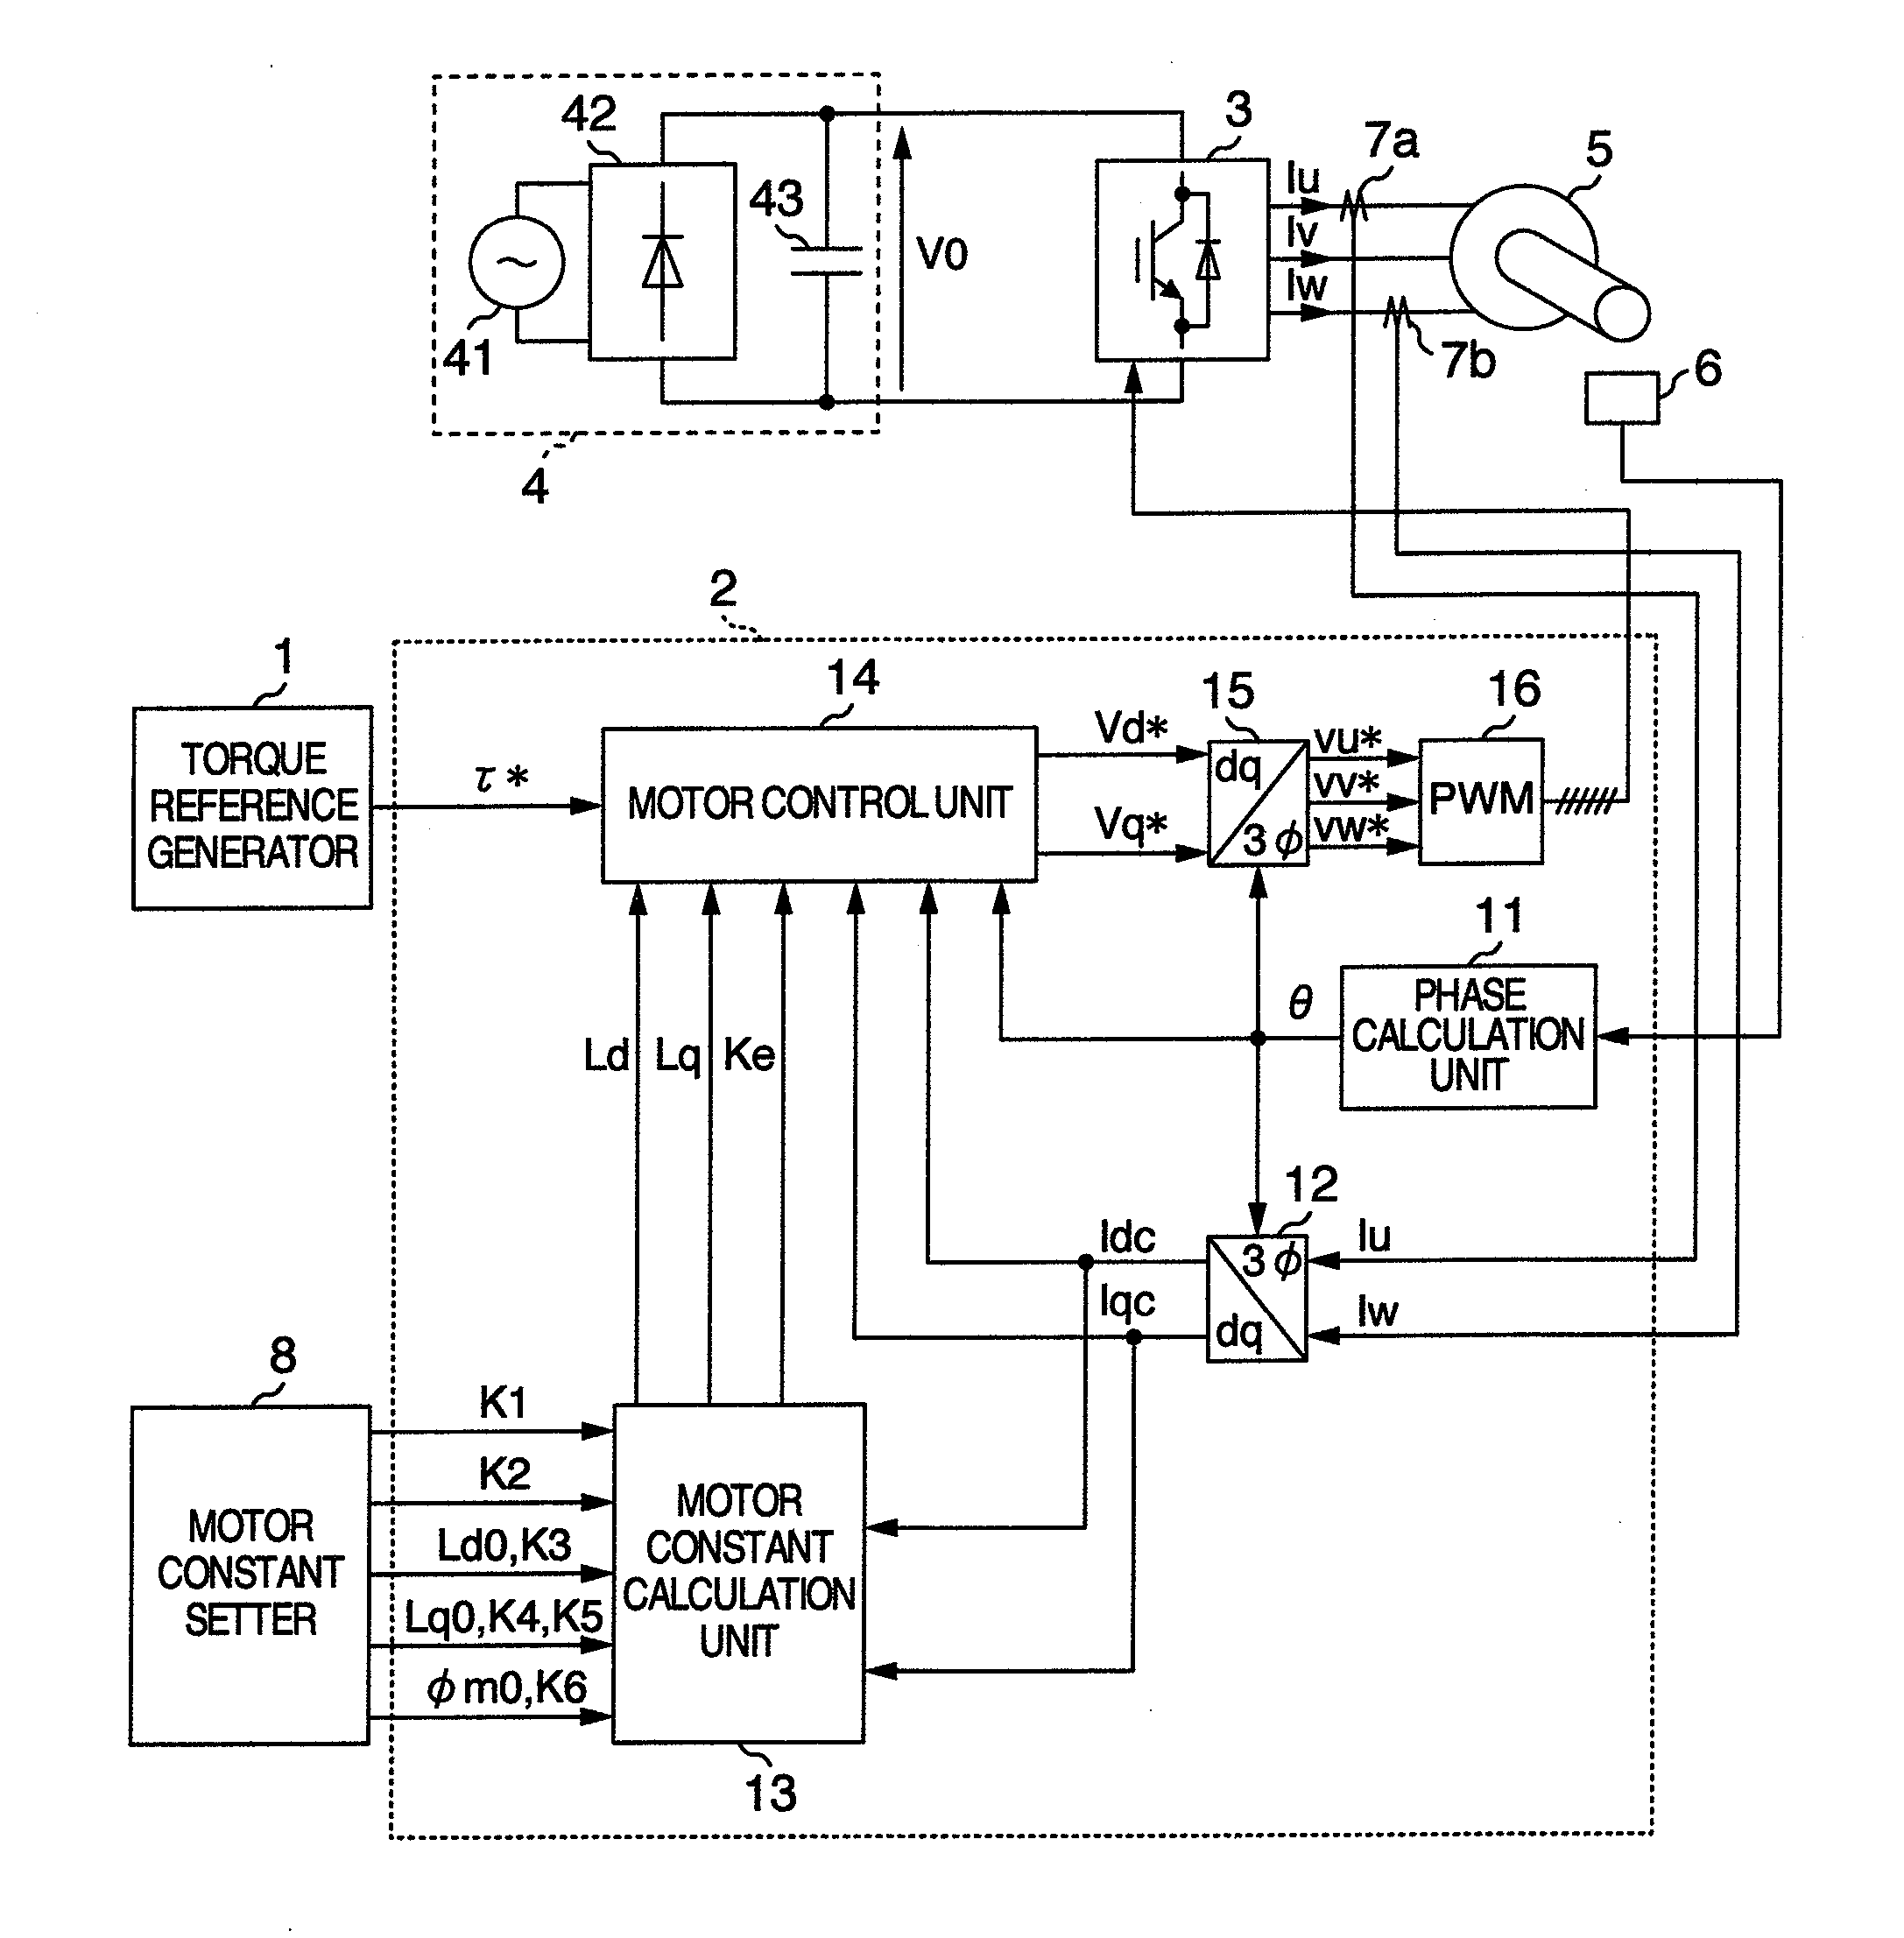 Control apparatus for ac motor